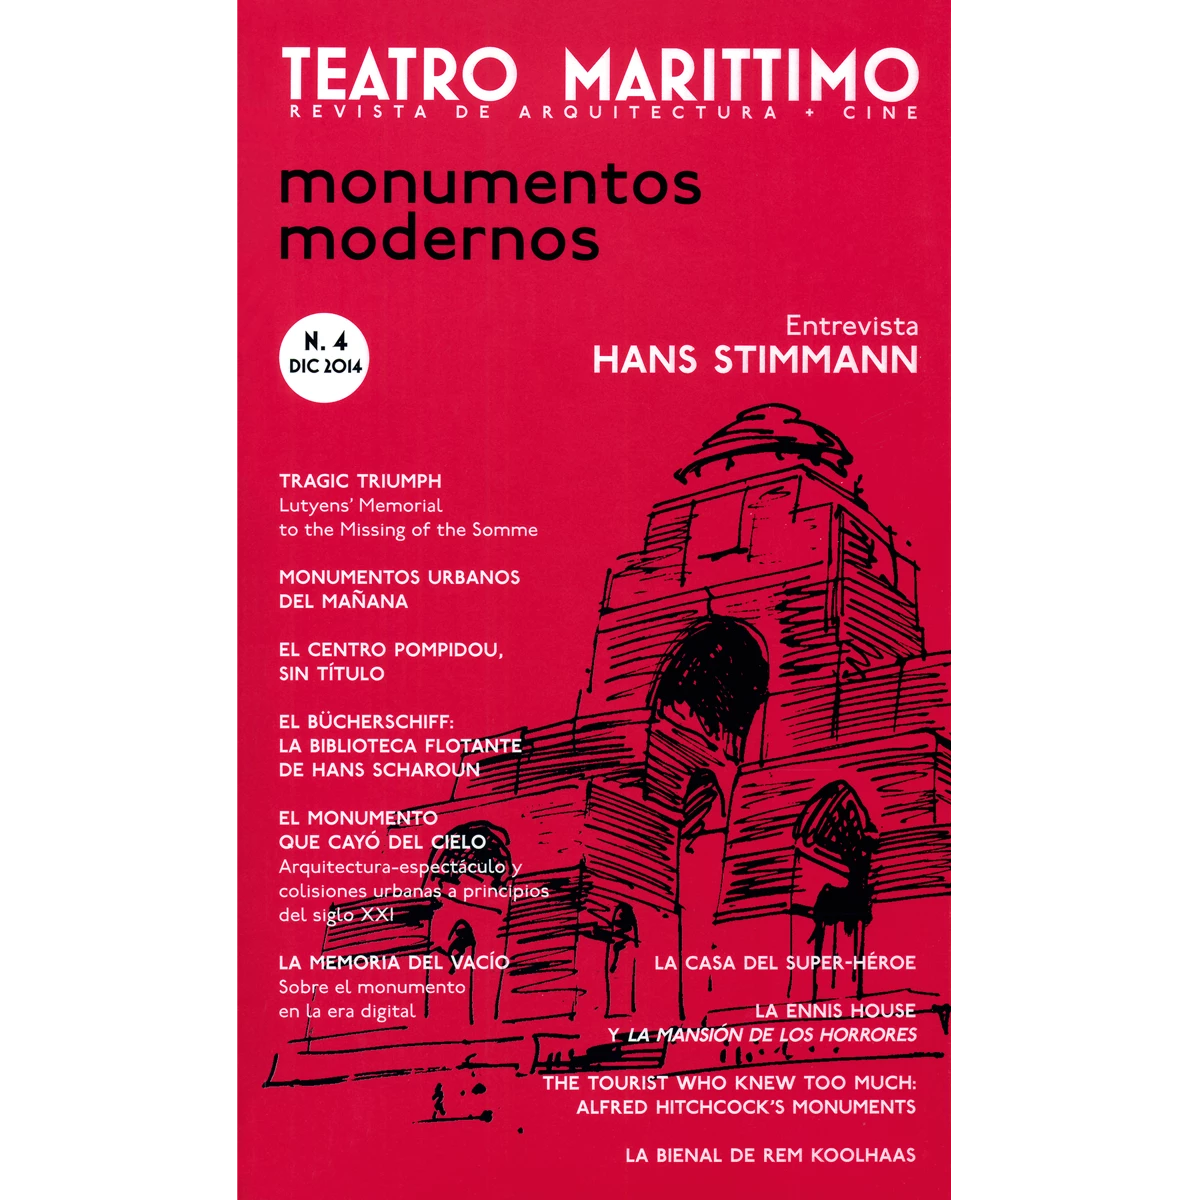 Teatro Marittimo: Monumentos modernos